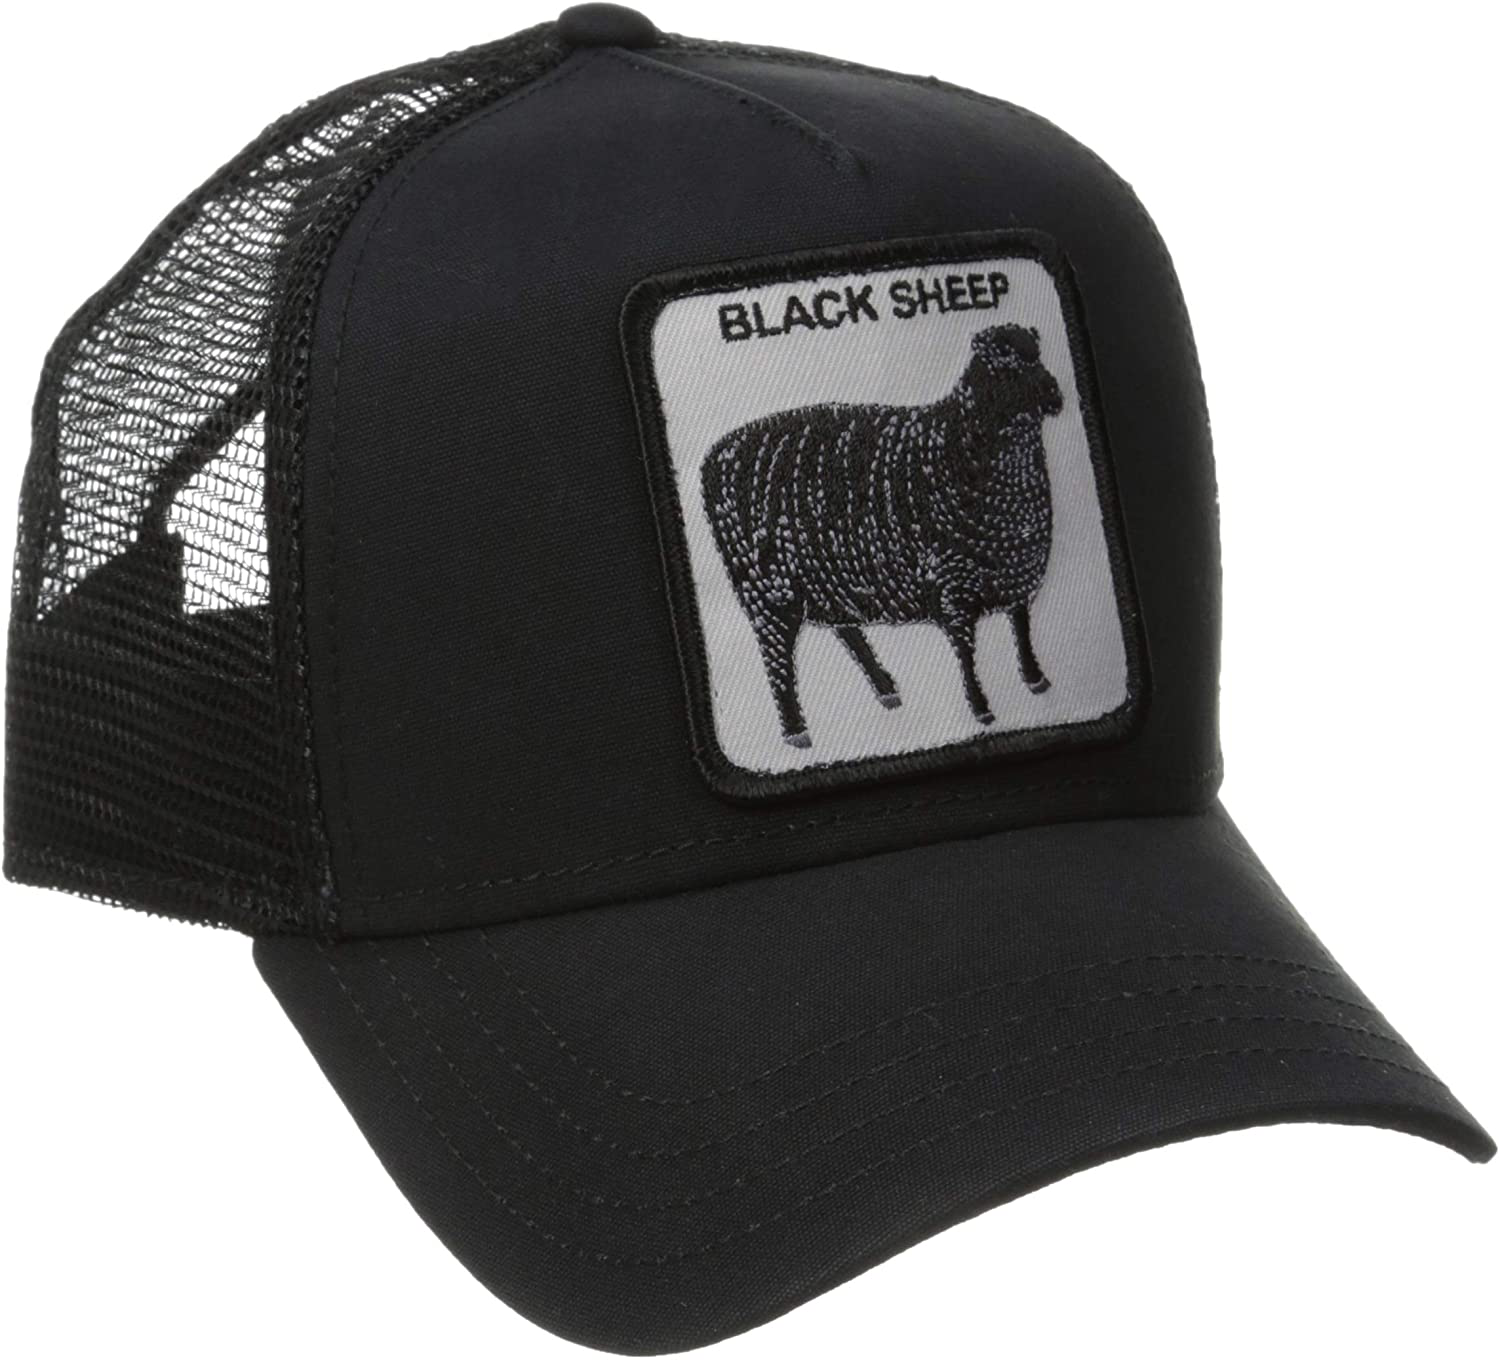 Goorin Bros Black Sheep Men's Trucker Hat